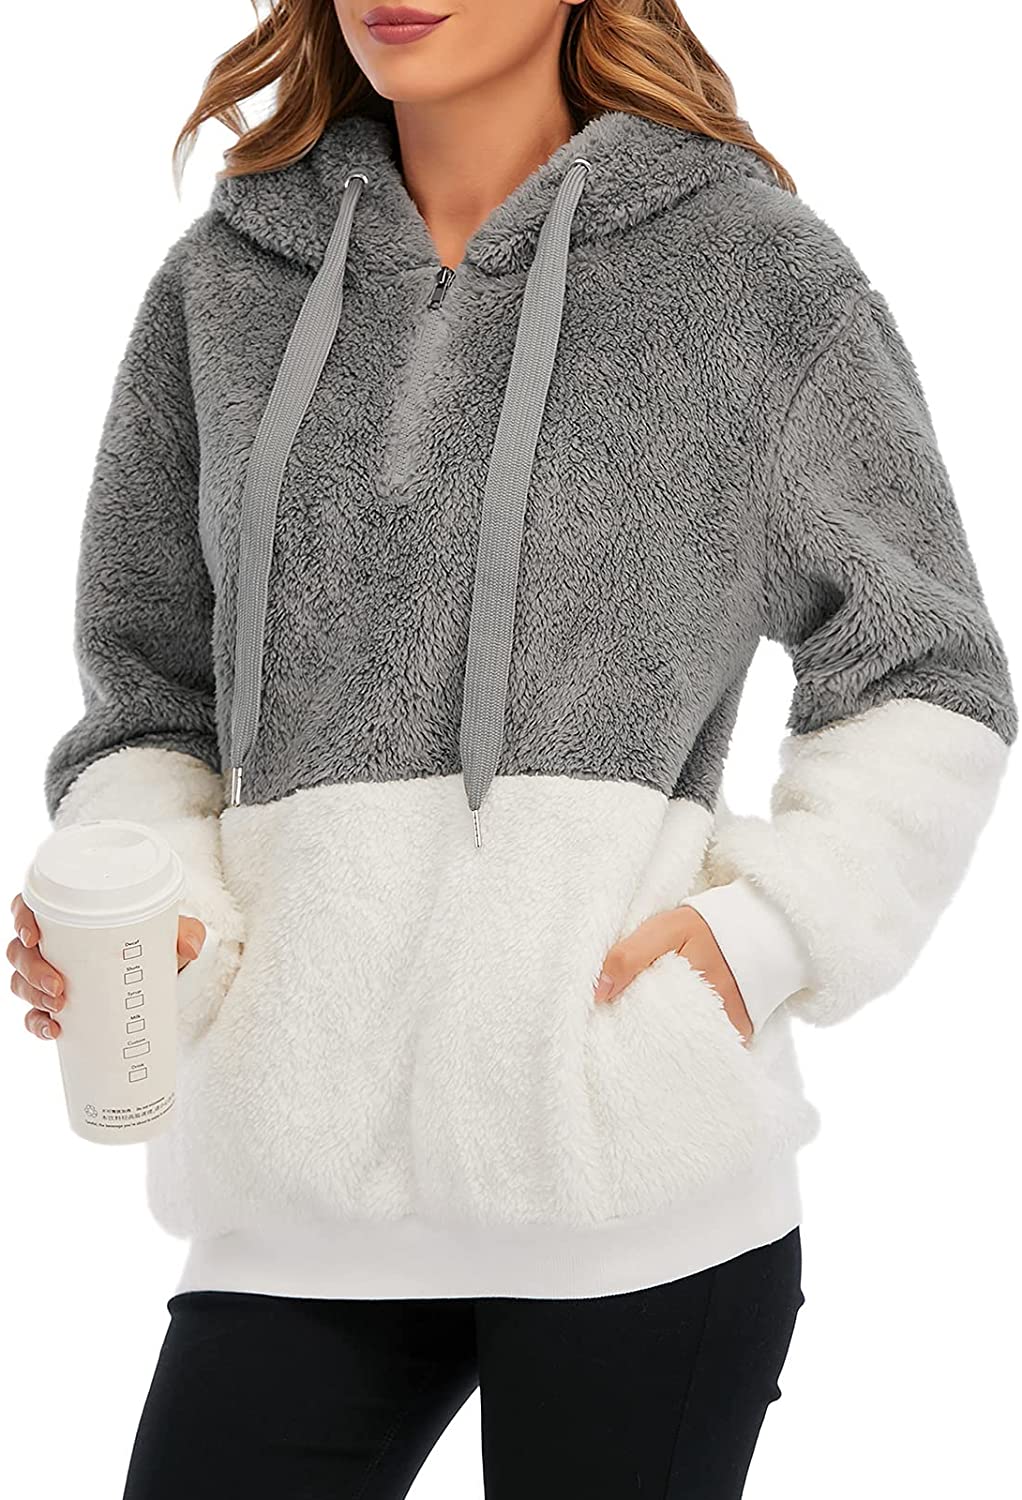 Century Star Women's Fuzzy Hoodies Sport Pullover Hoodie Athletic Cozy Oversized Pockets Hooded Sweatshirt Fleece Hoodies 